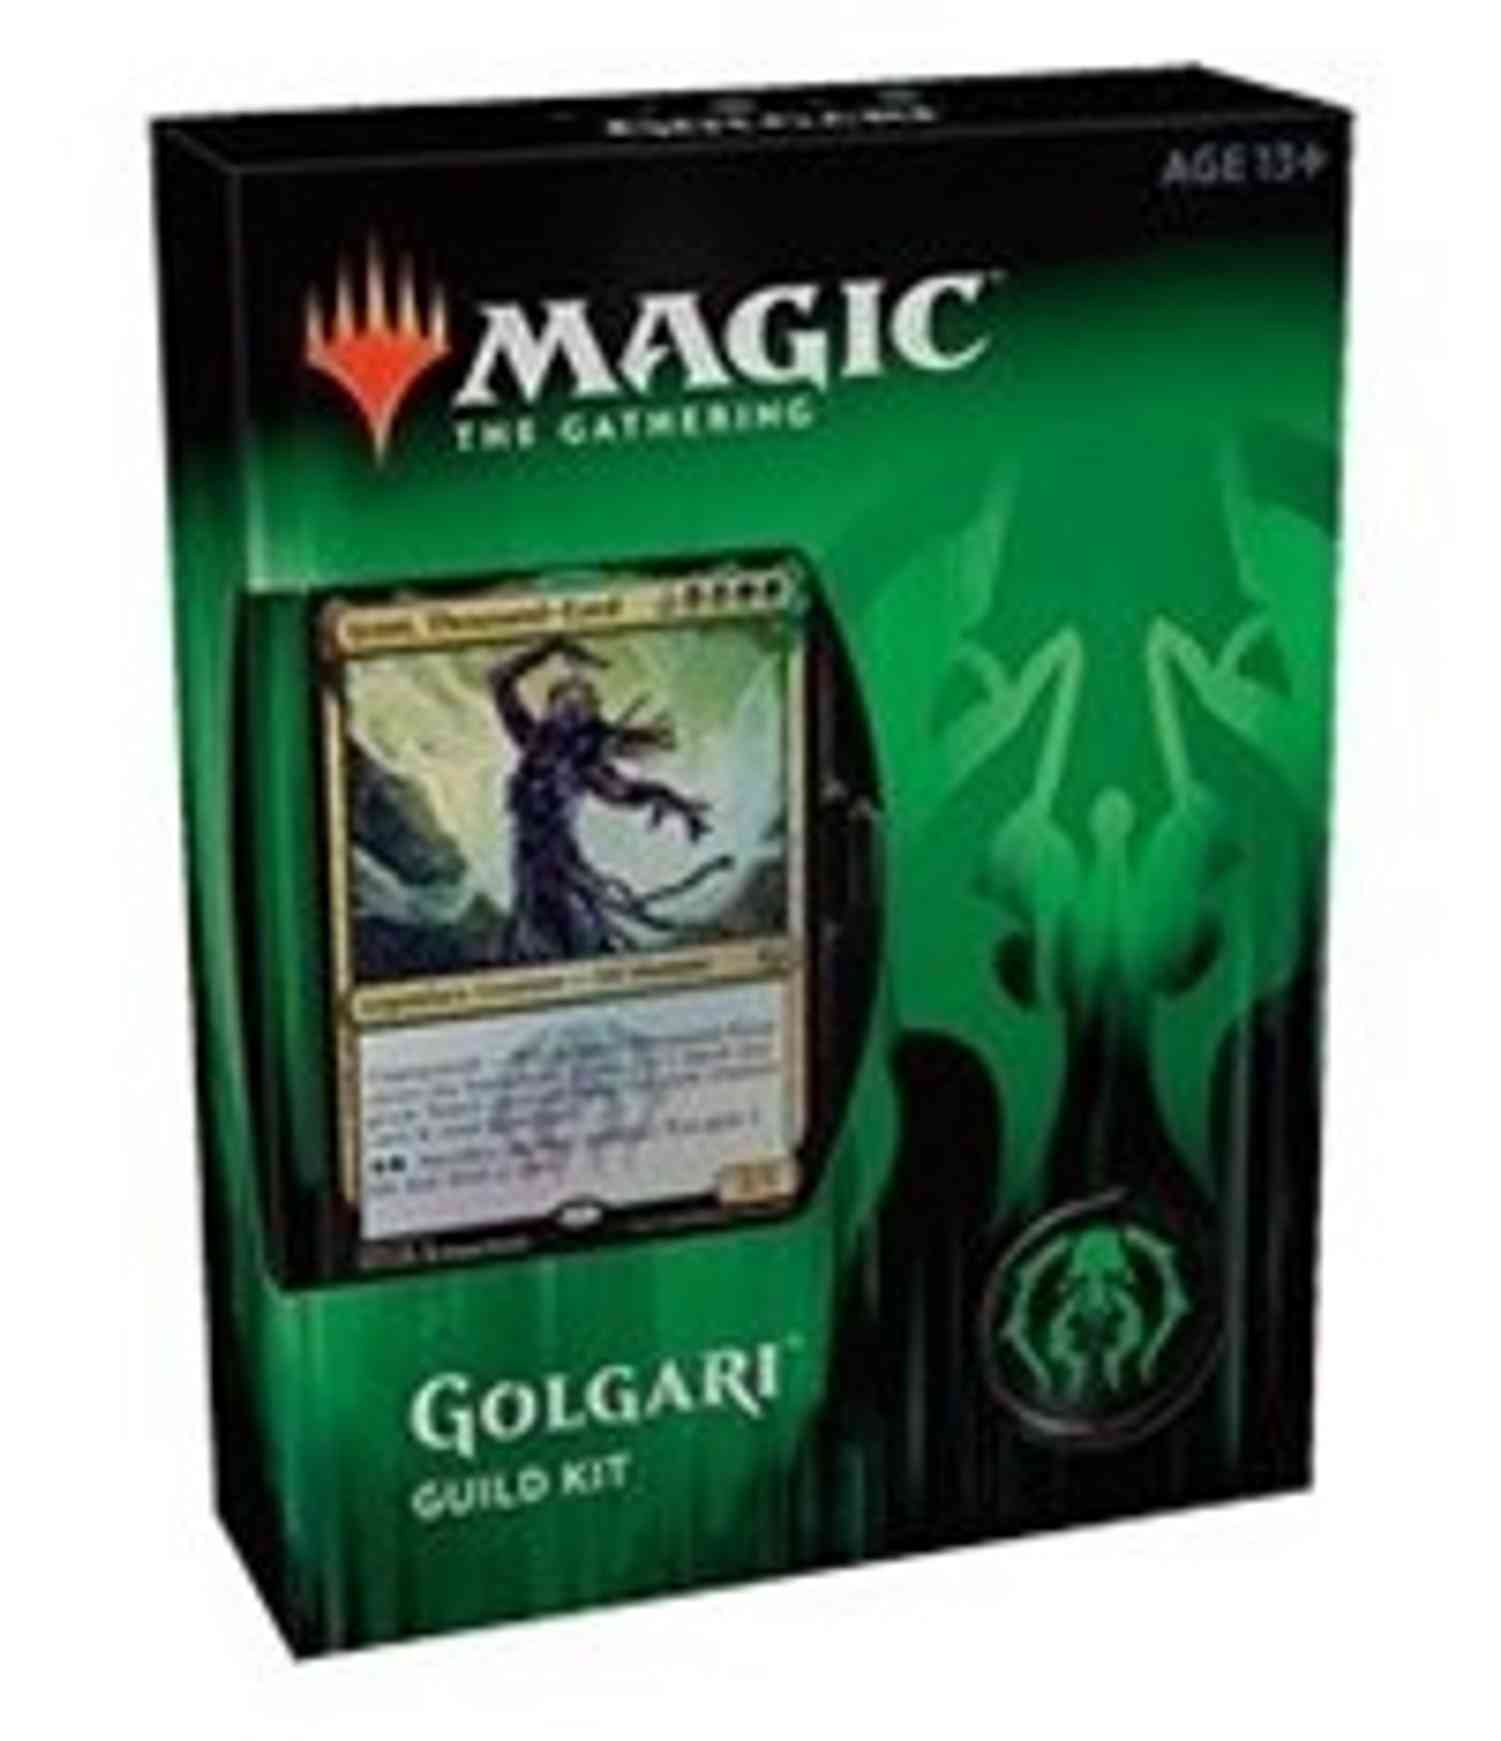 Guilds of Ravnica - Guild Kit: Golgari magic card front